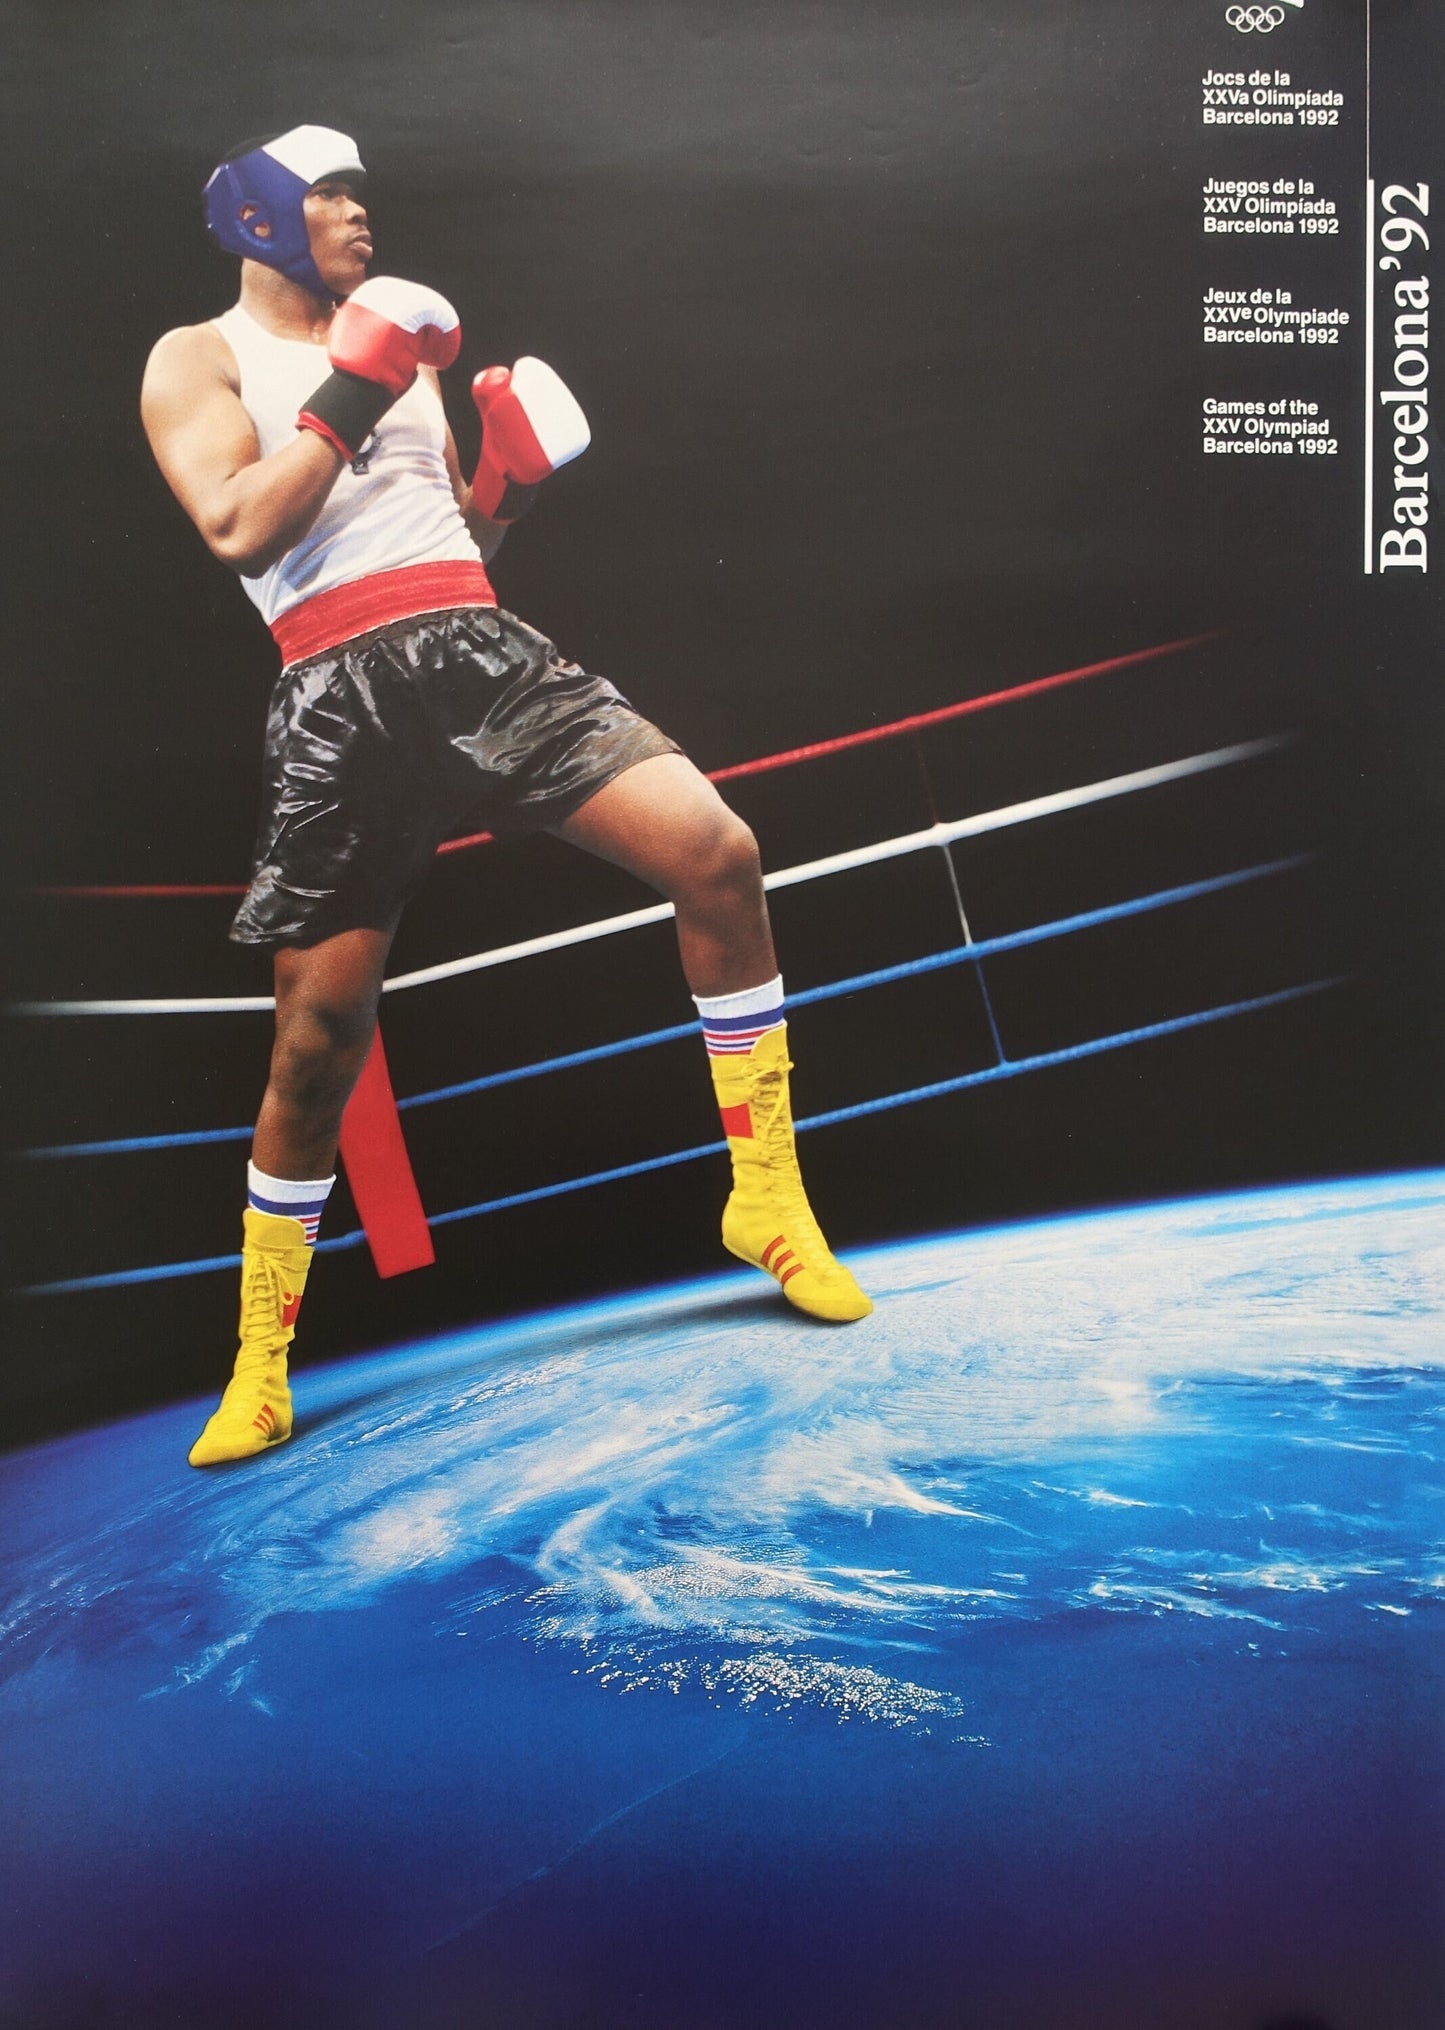 1992 Summer Olympic Games Boxing - Original Vintage Poster